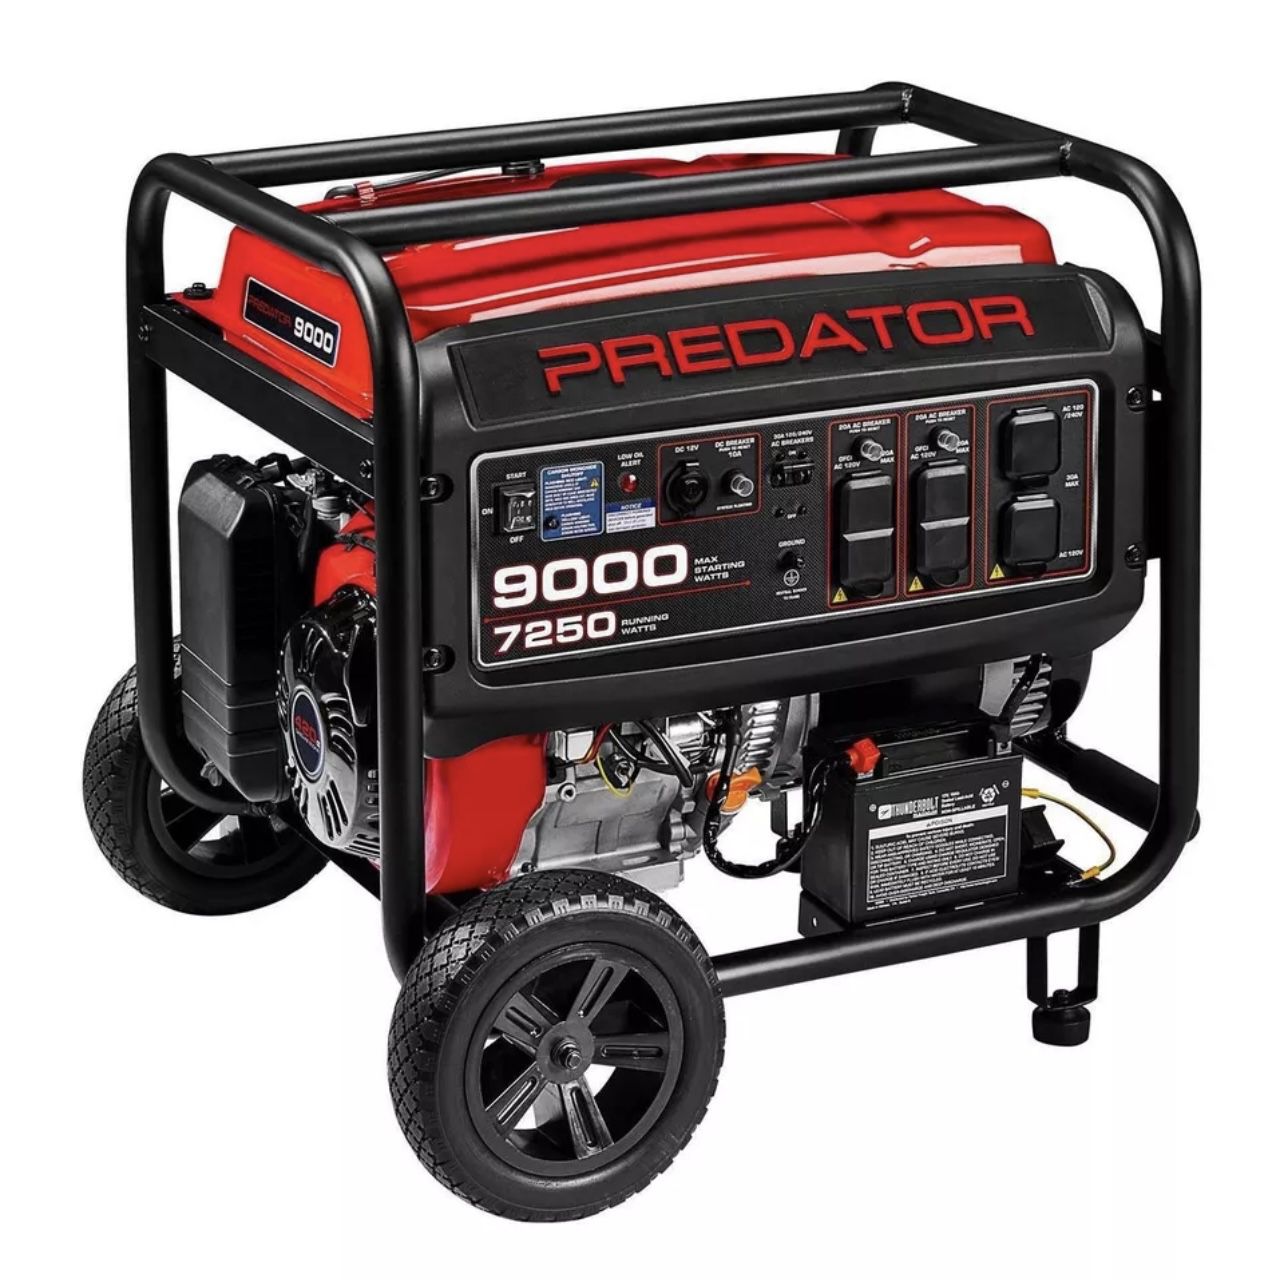 Brand New Predator 9000 Watt Gas Powered Portable Generator 